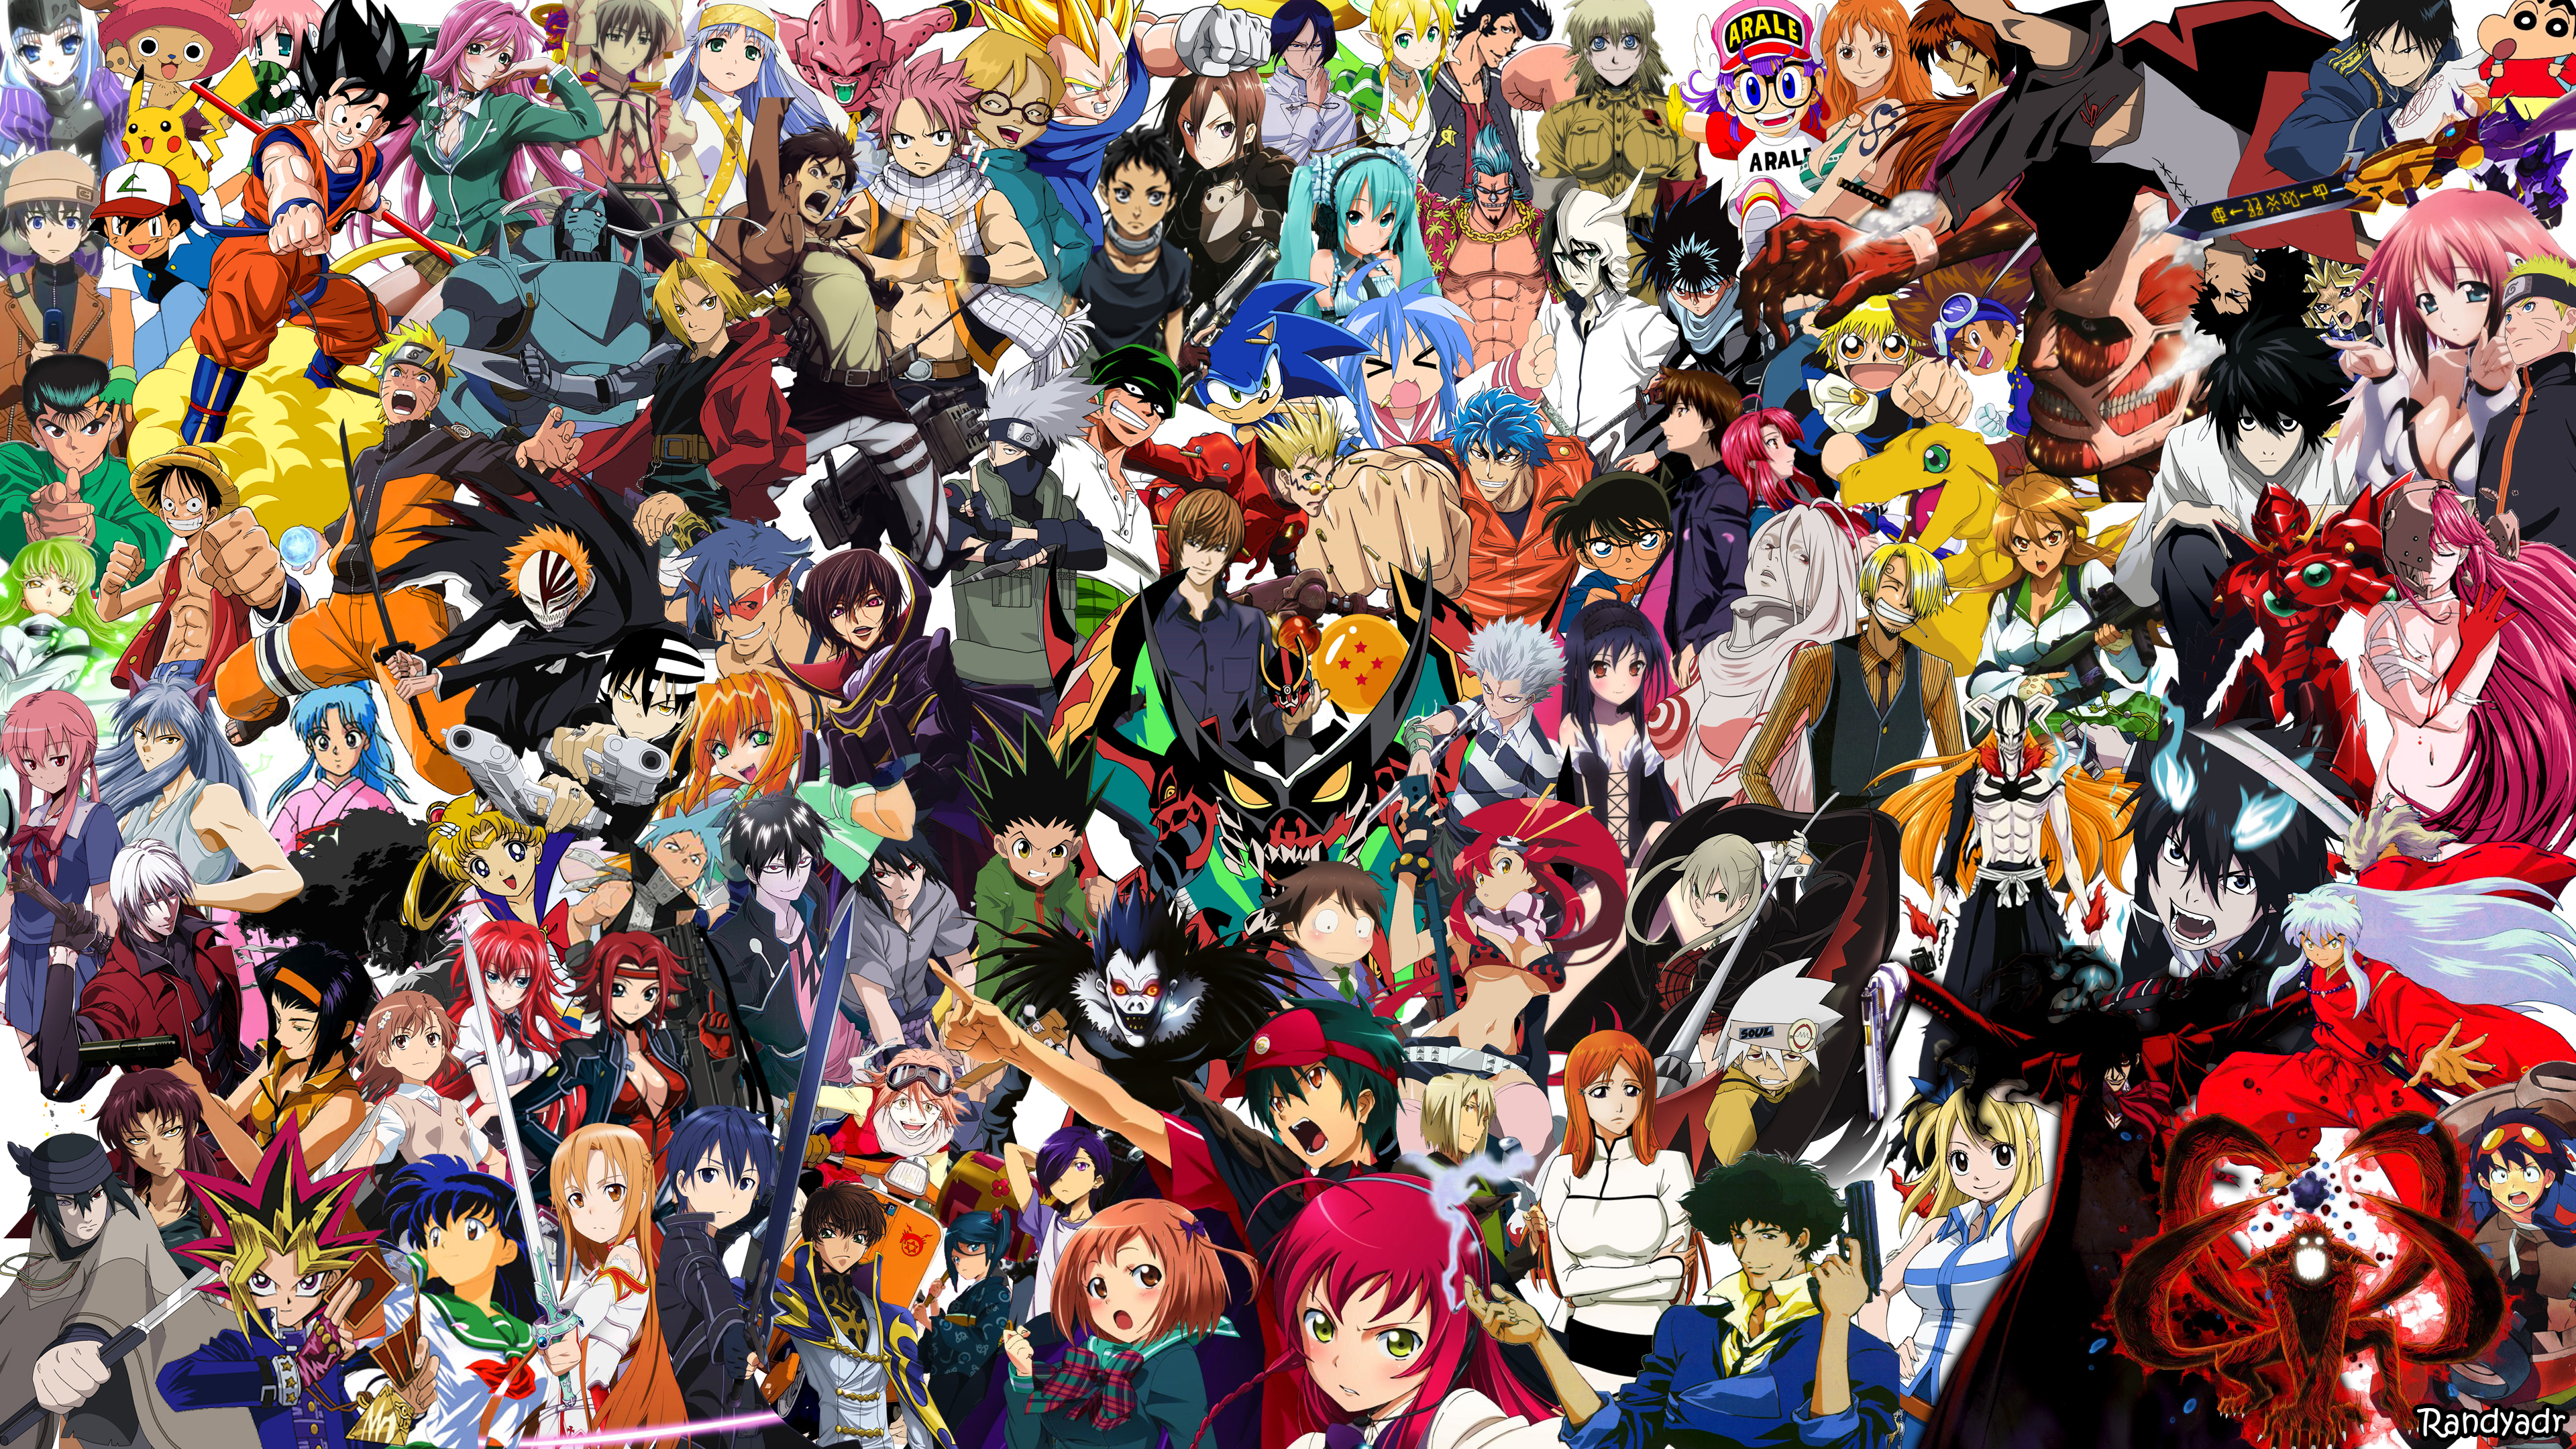 fond d'écran collage anime,foule,gens,dessin animé,anime,dessin animé